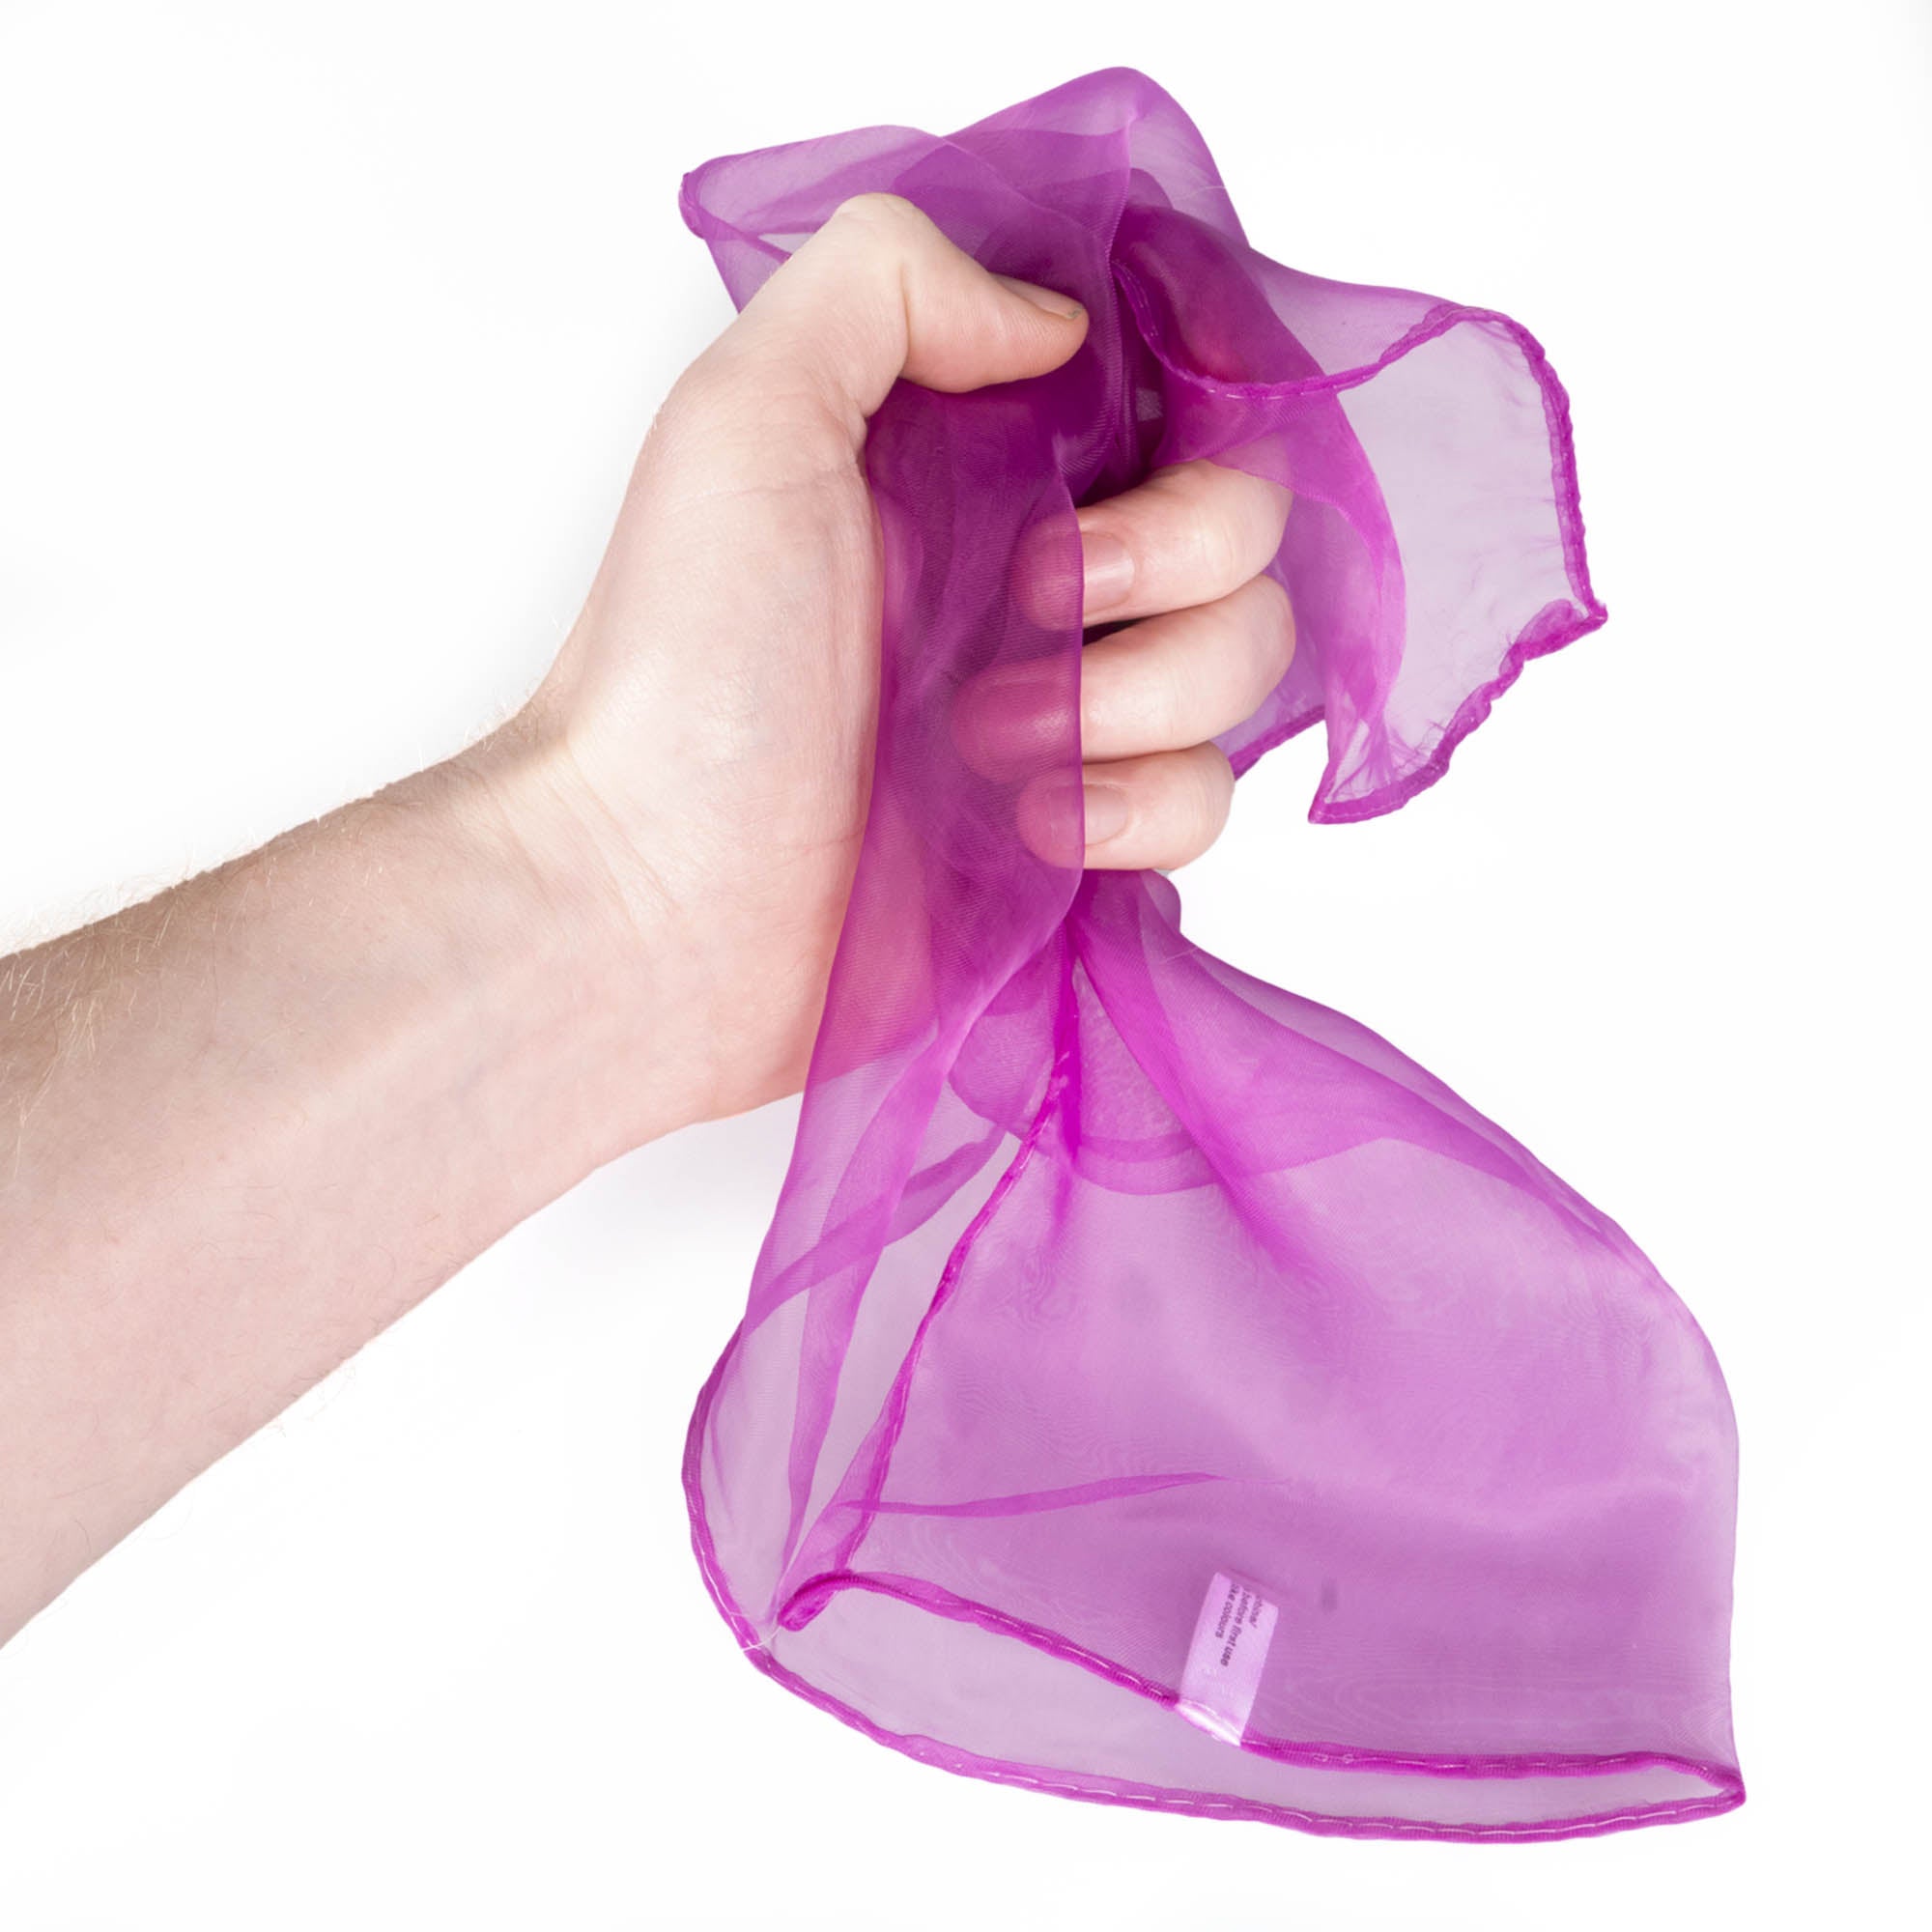 Purple juggling scarf in hand